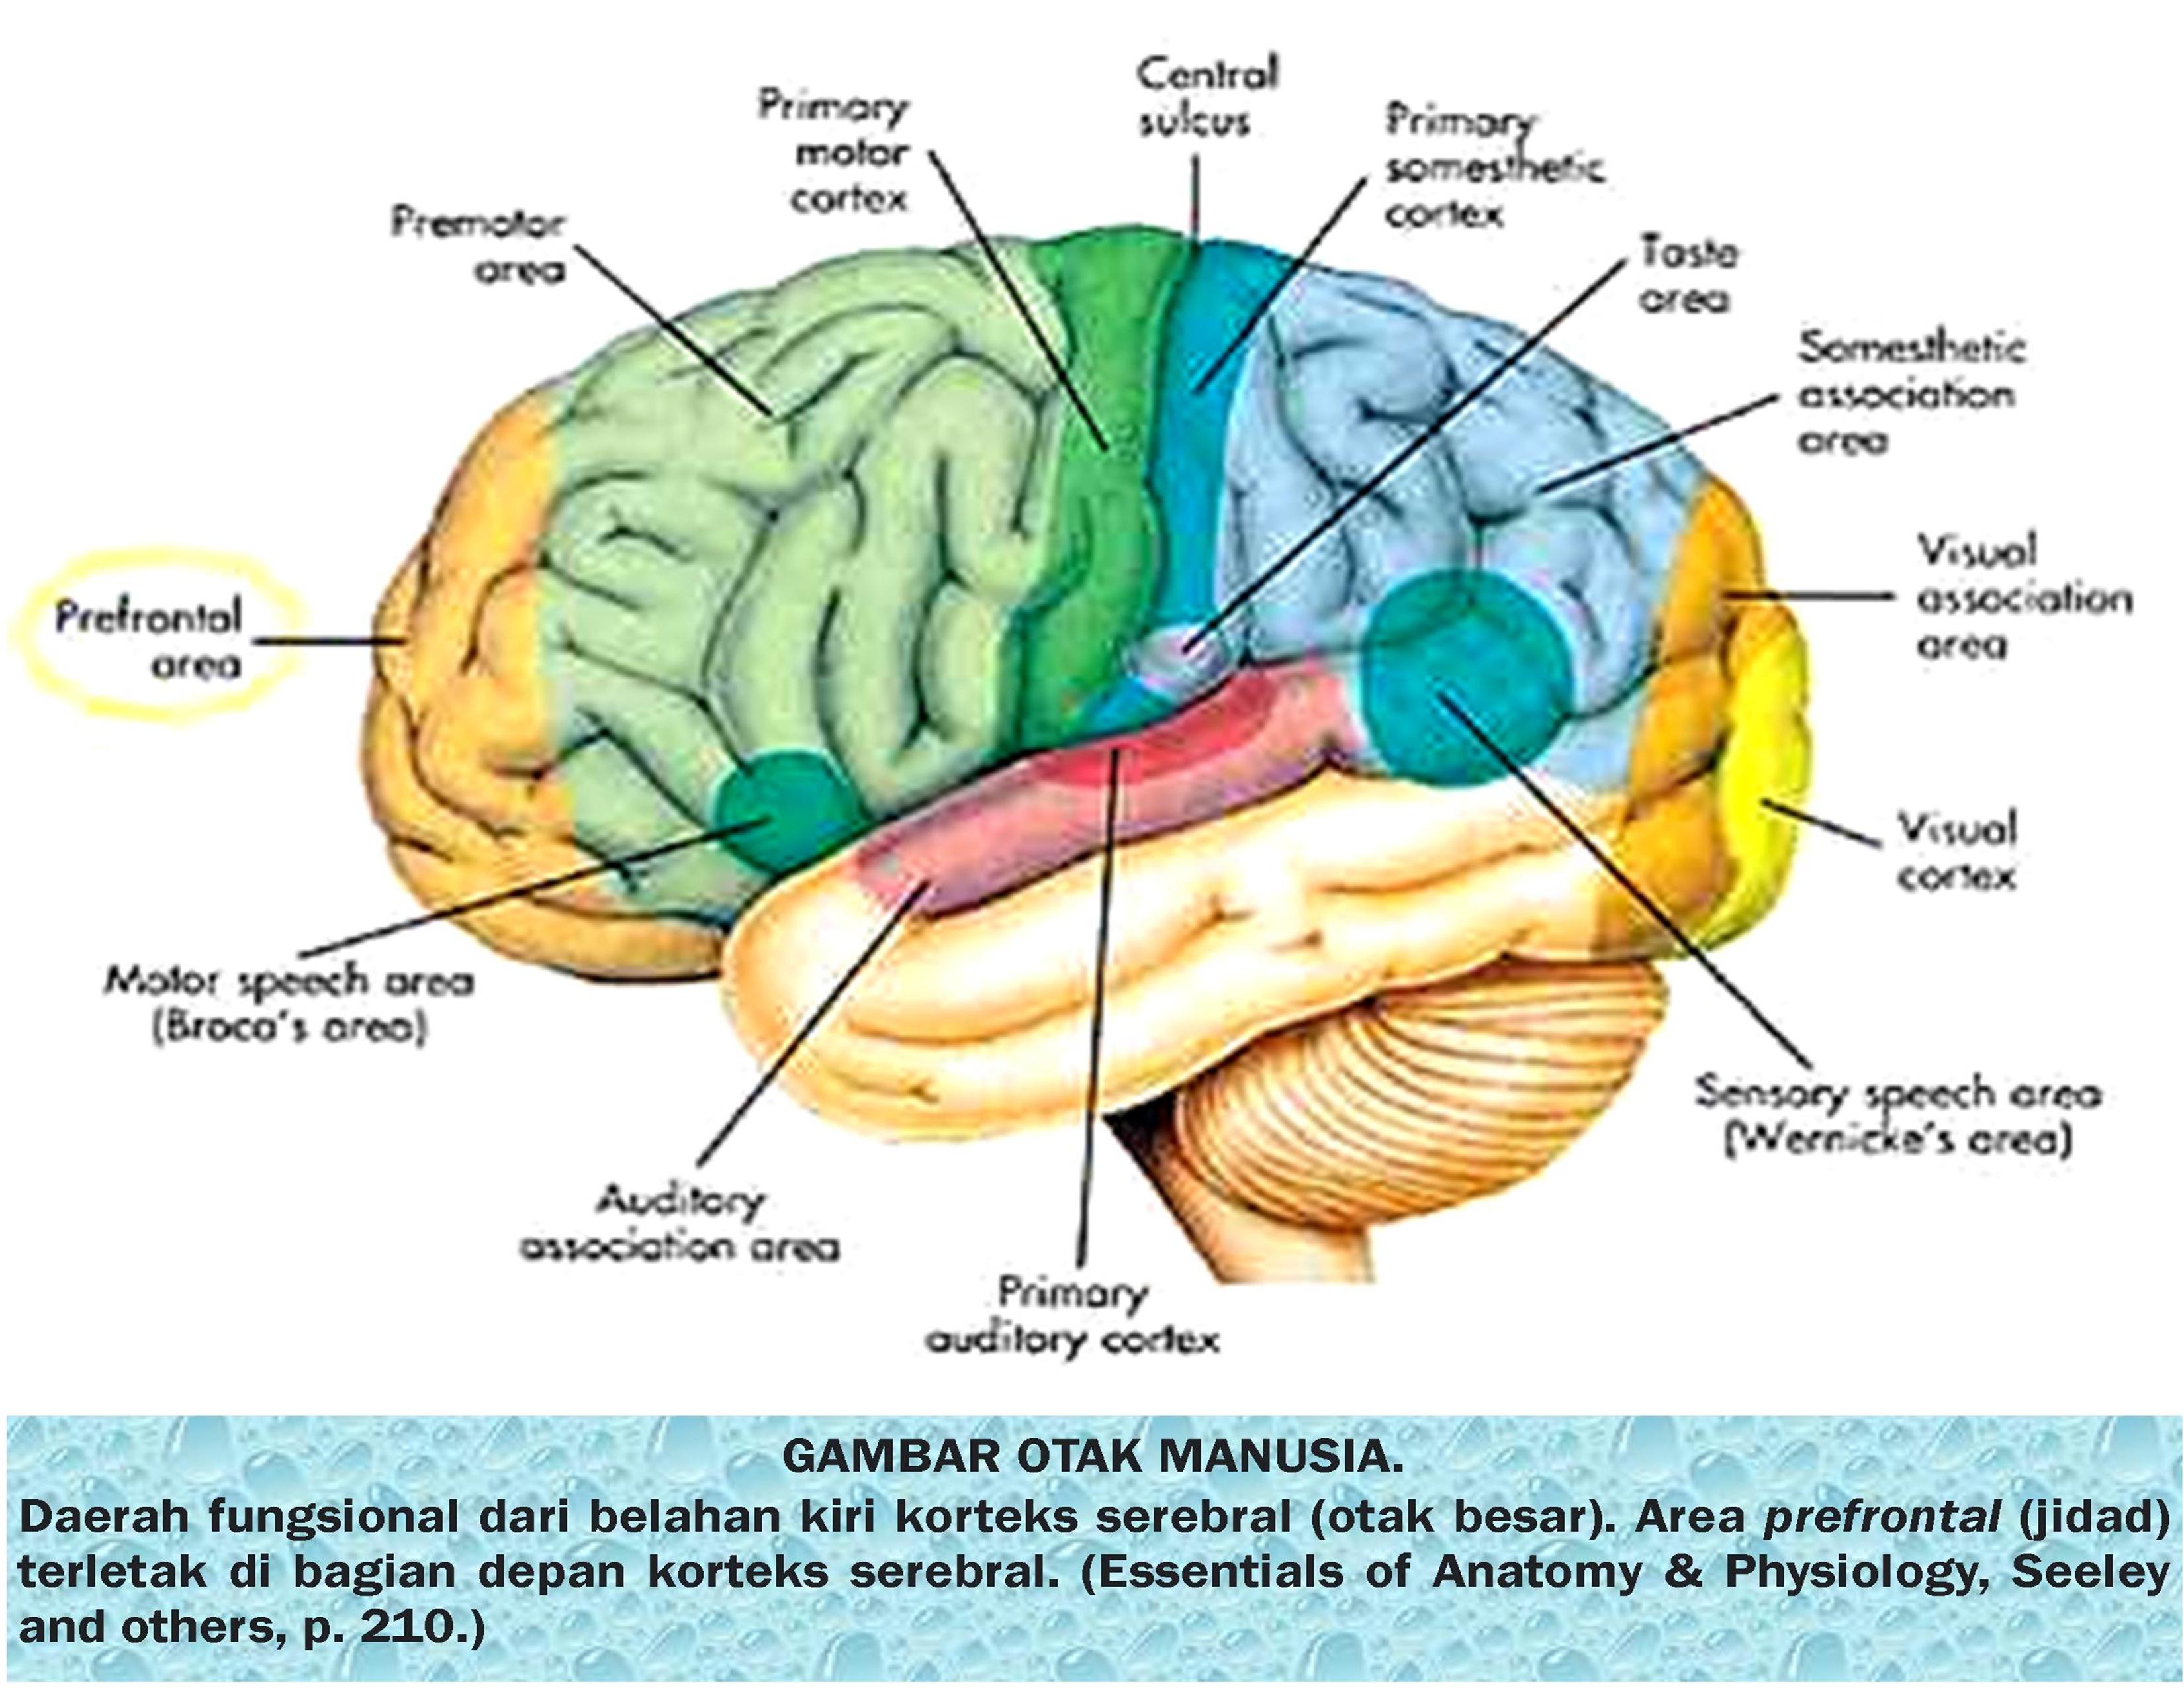 Поверхности коры головного мозга